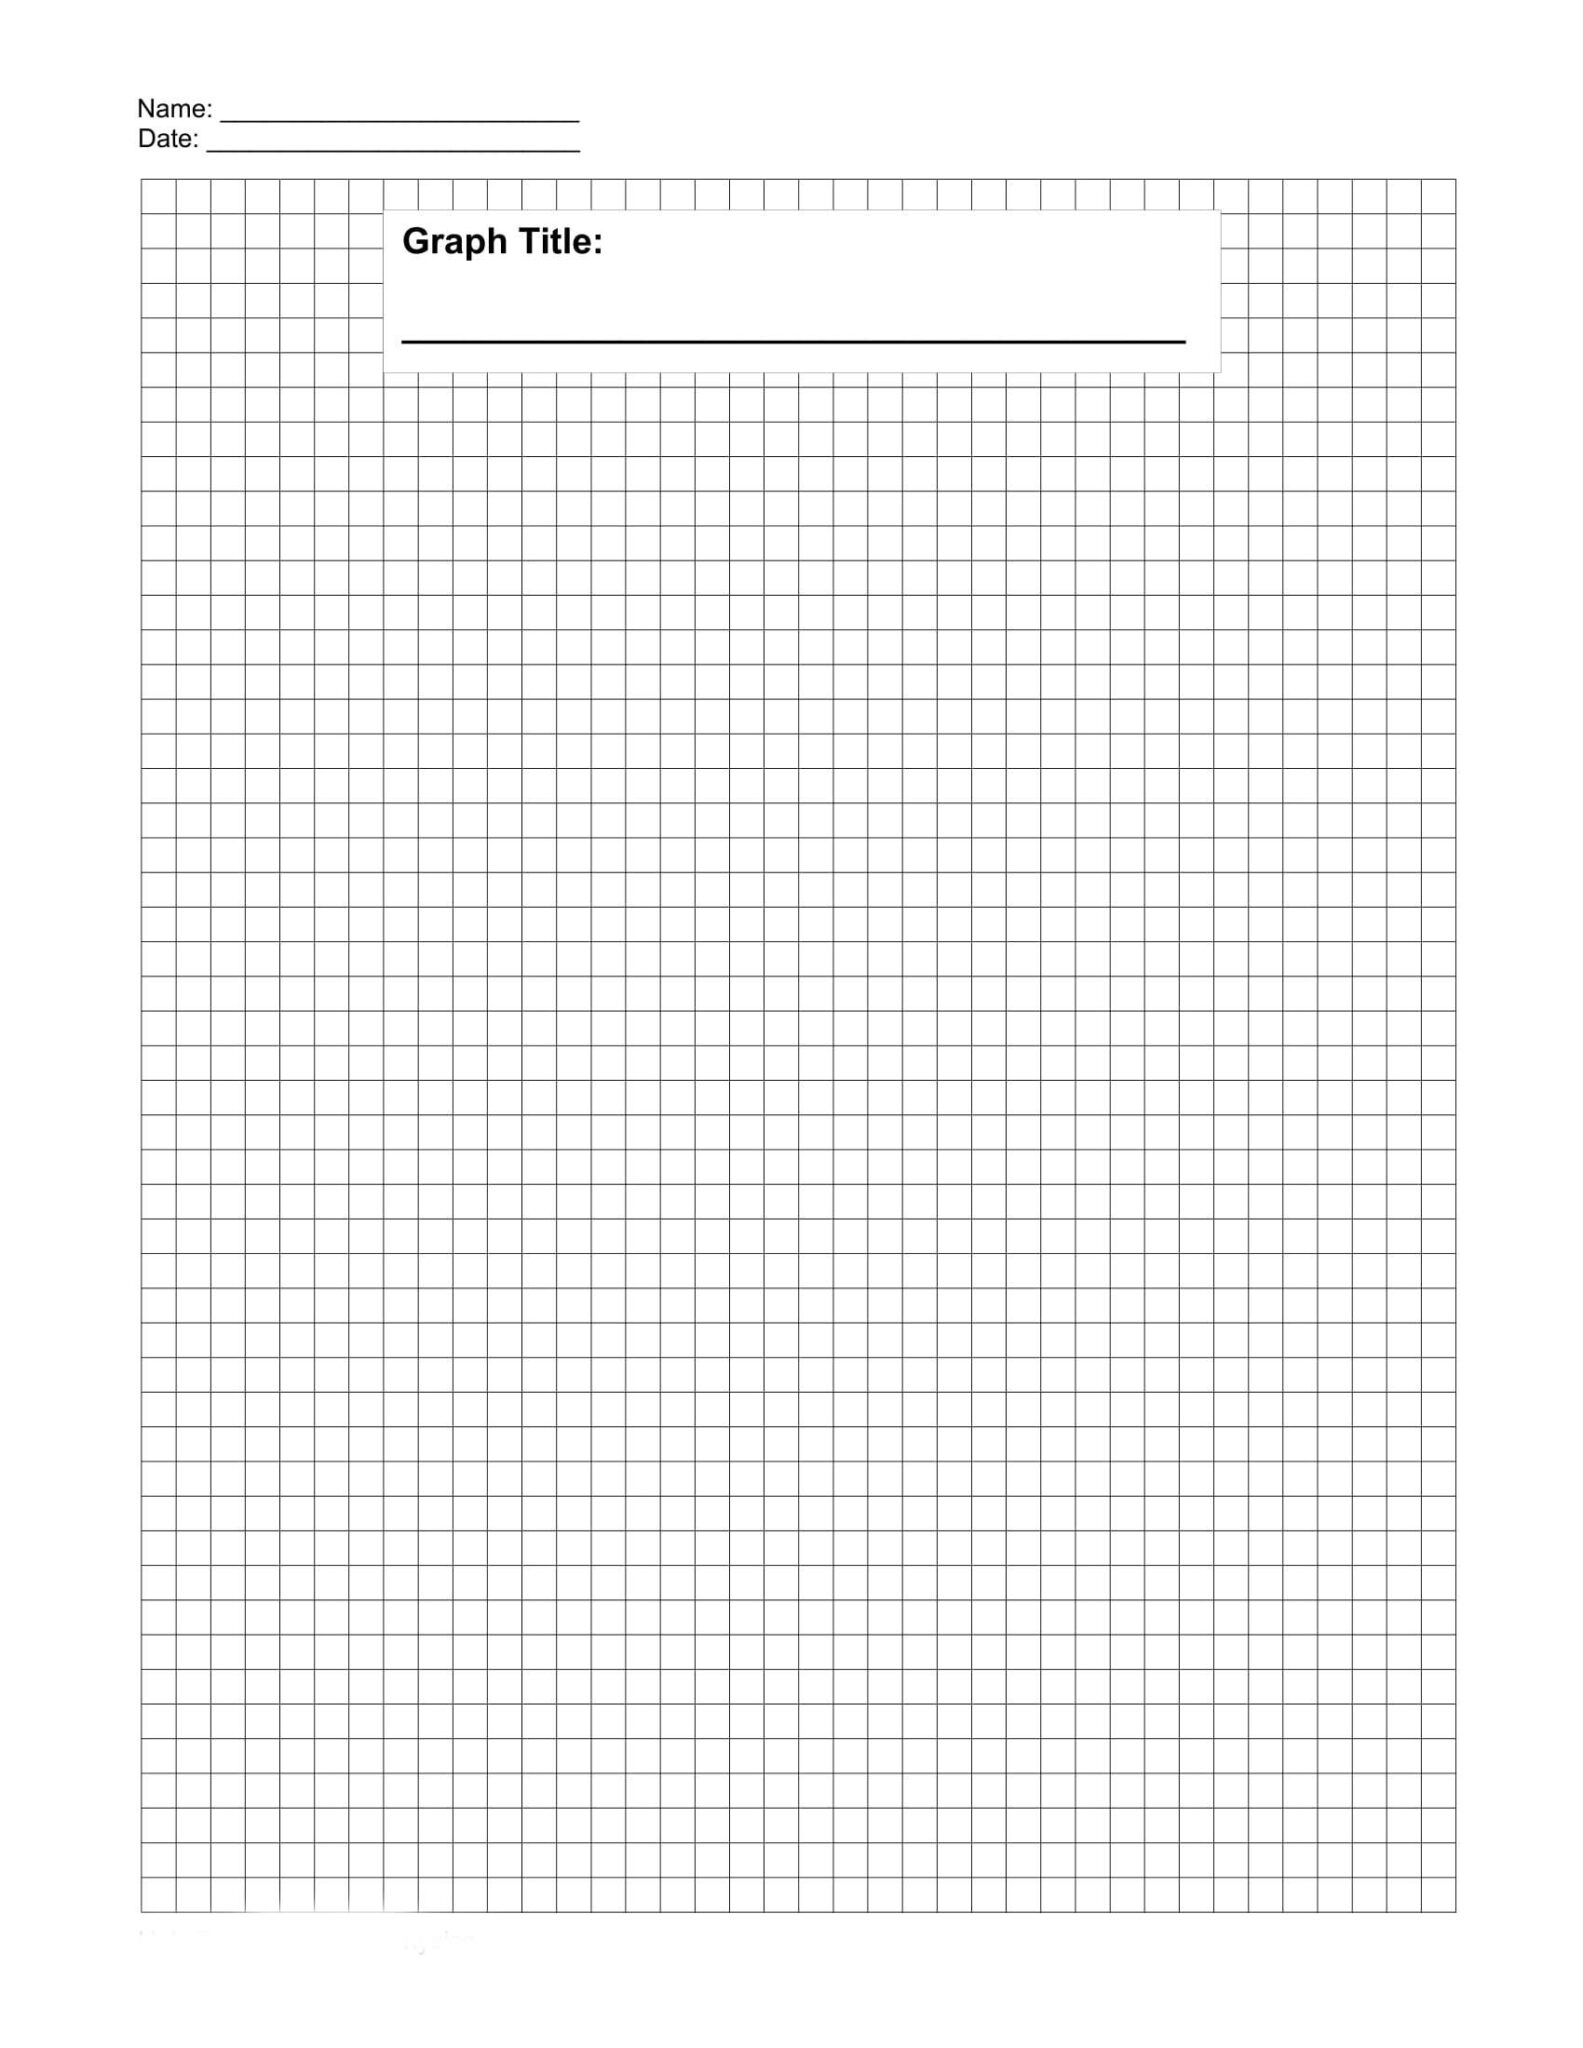 printable-graph-paper-templates-word-pdf-templatedata-vrogue